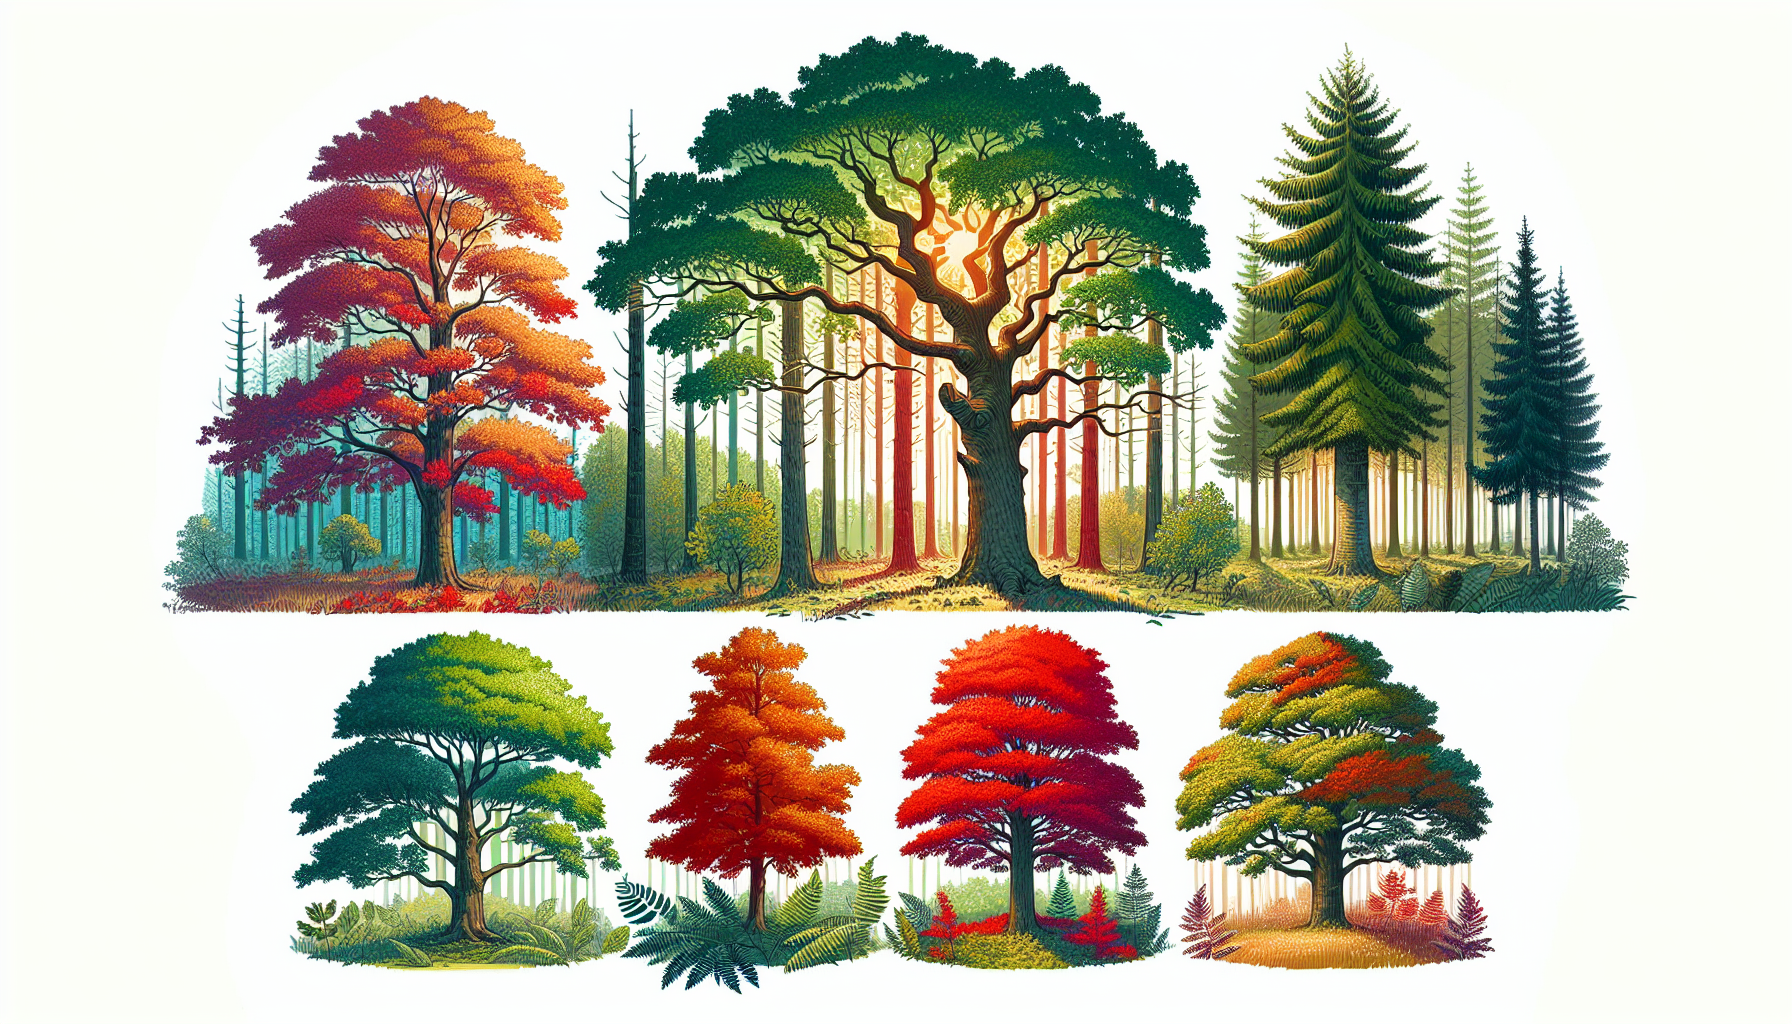 Illustration of different oak tree species